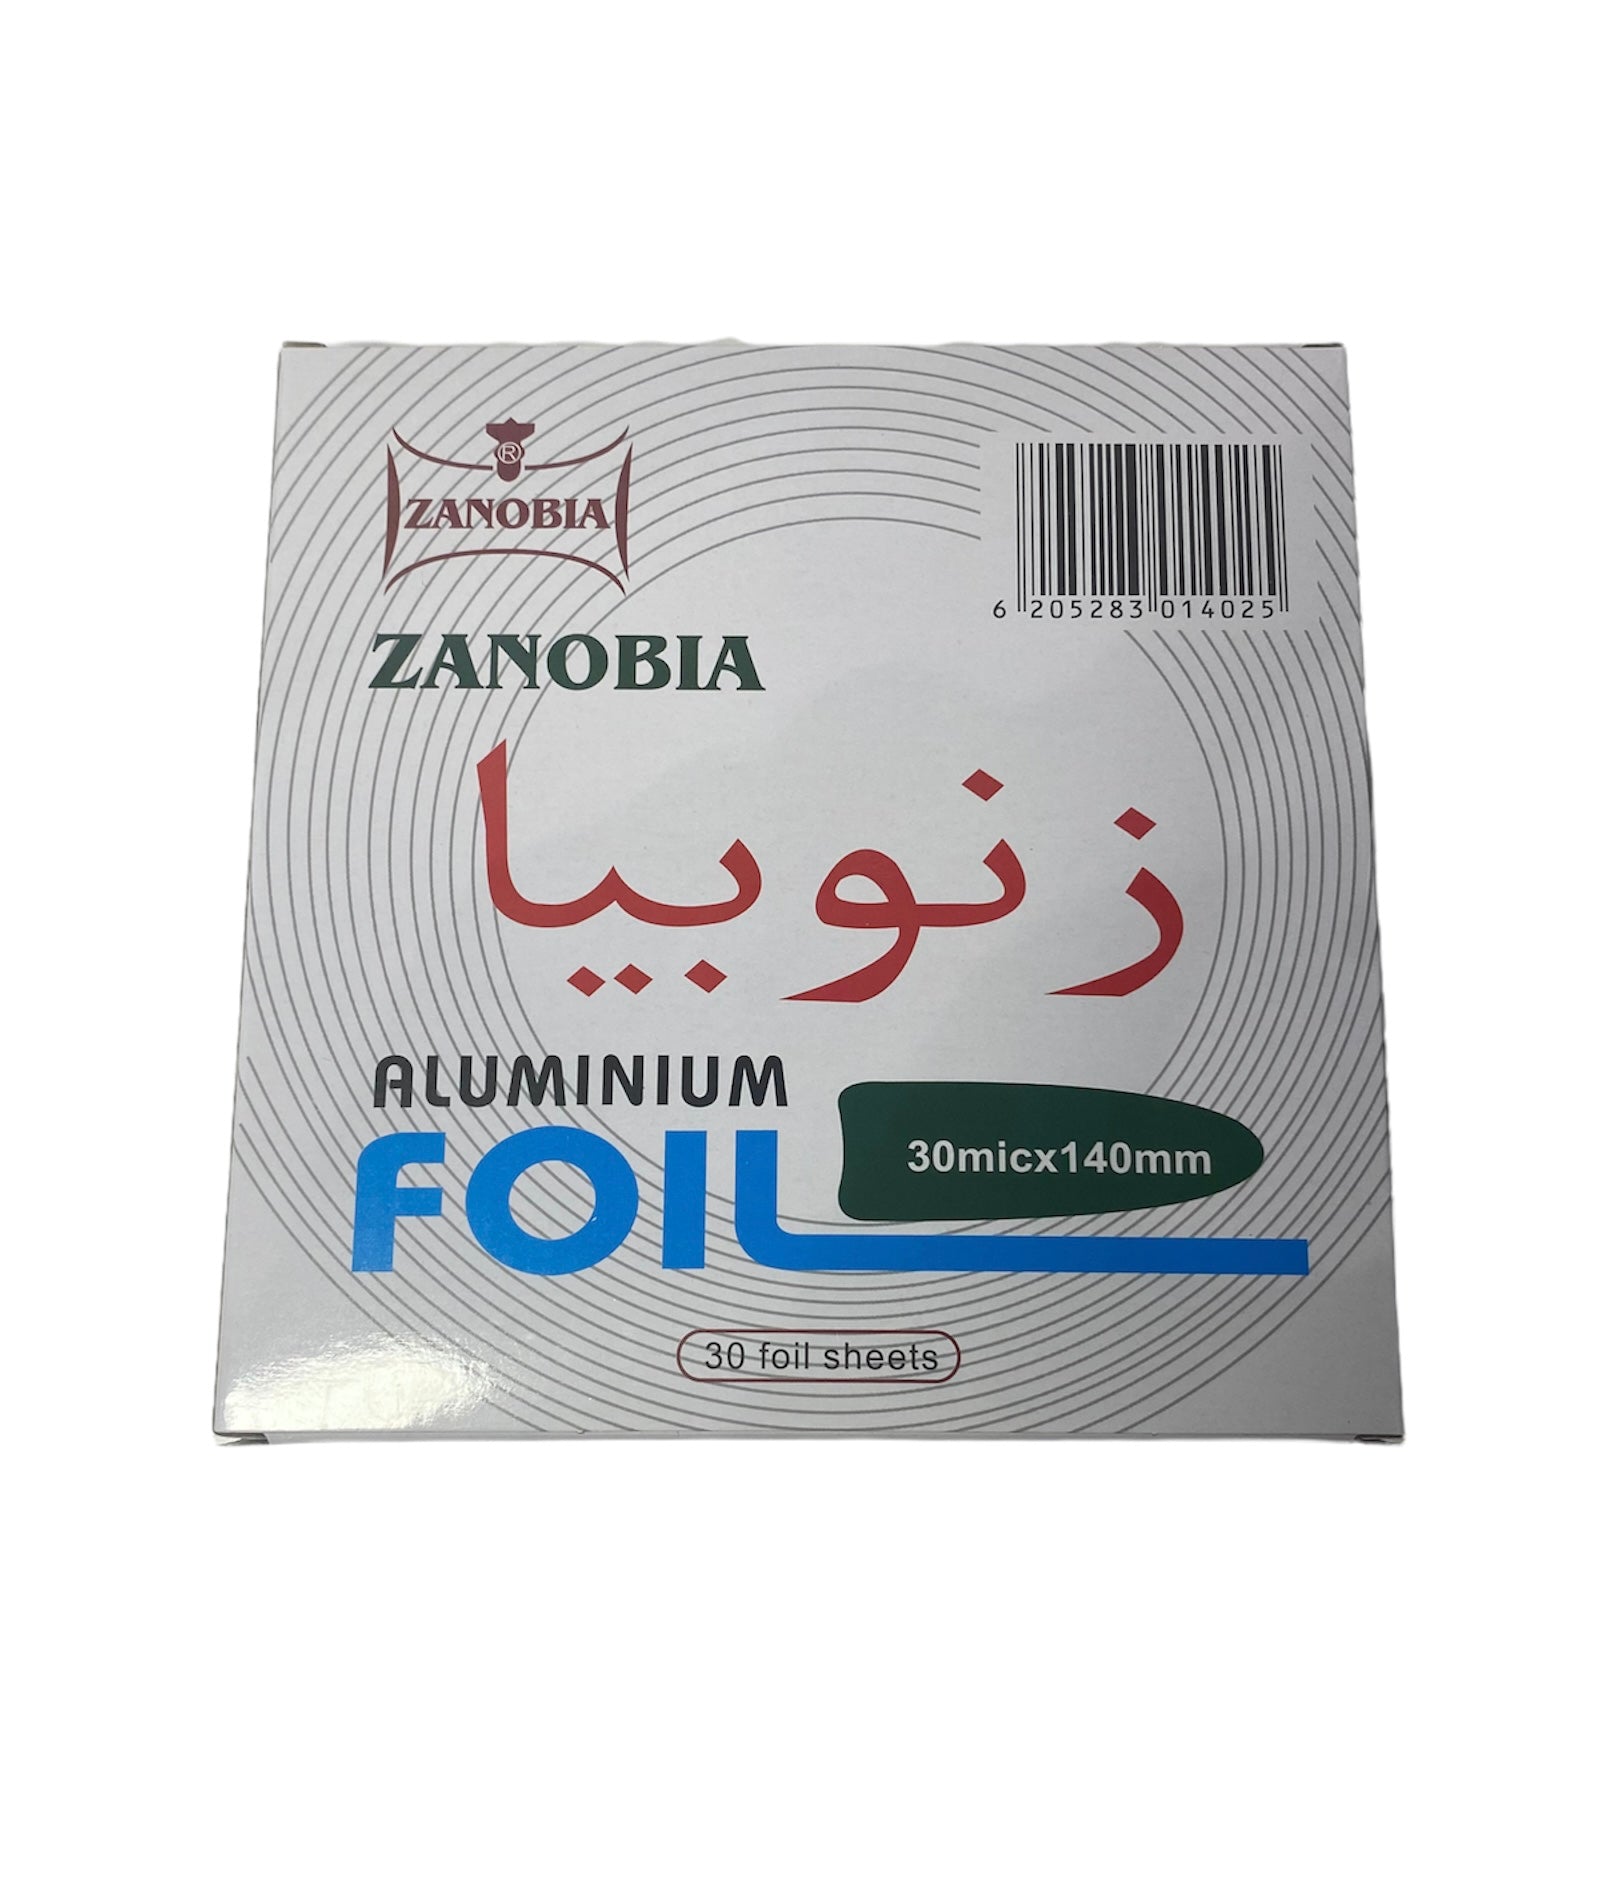 Zanobia Aluminum Foil-The Wee Smoke Shop